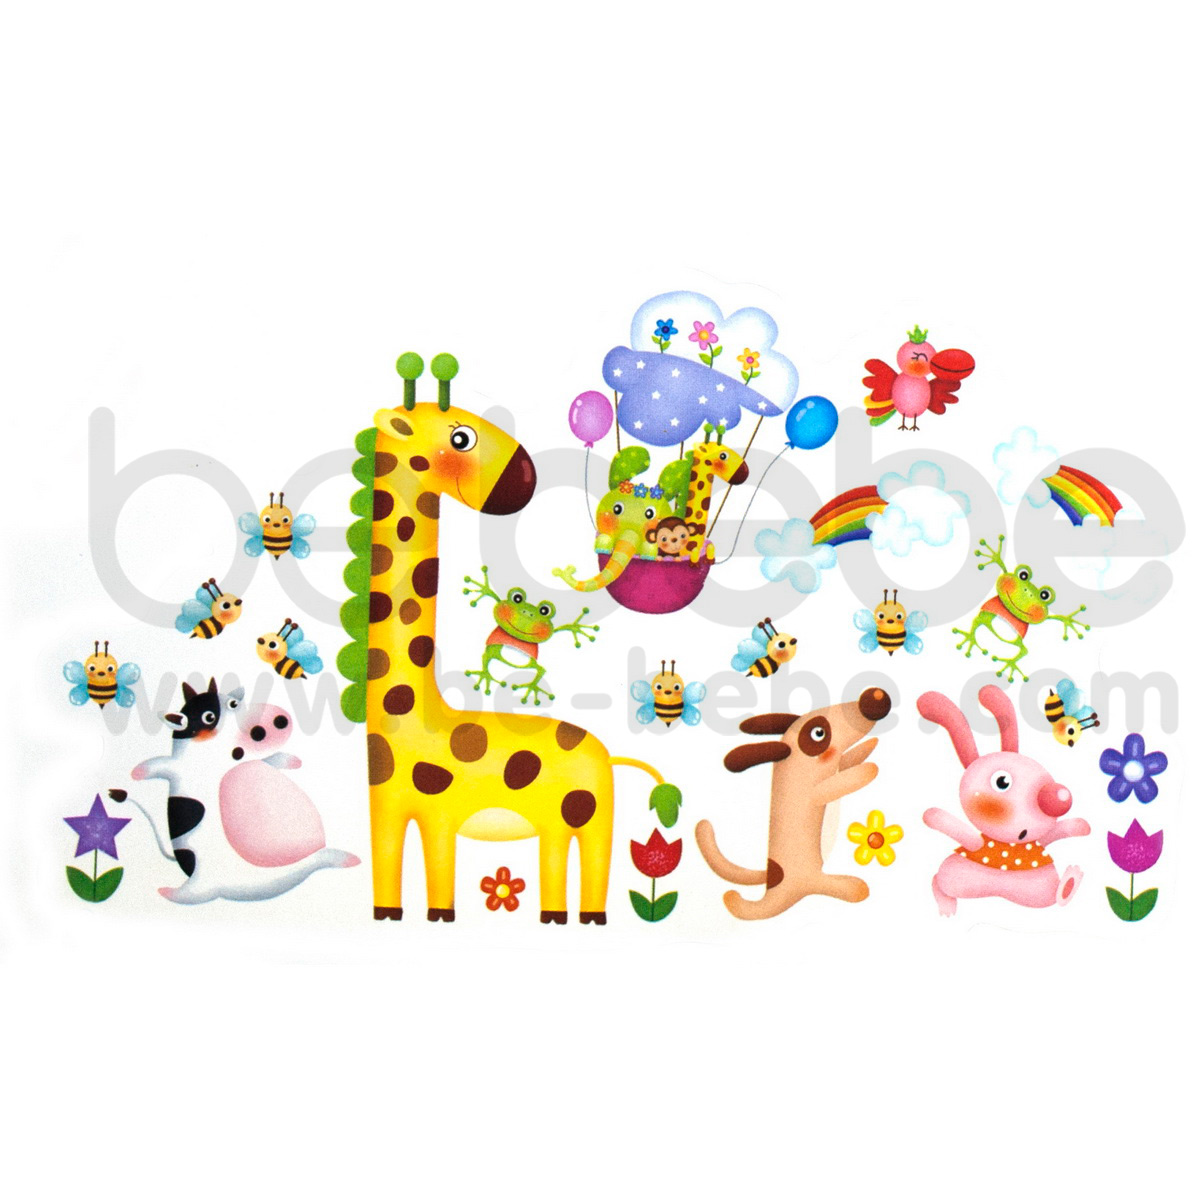 be bebe : Wall Sticker (50x70cm.) / HL-5911